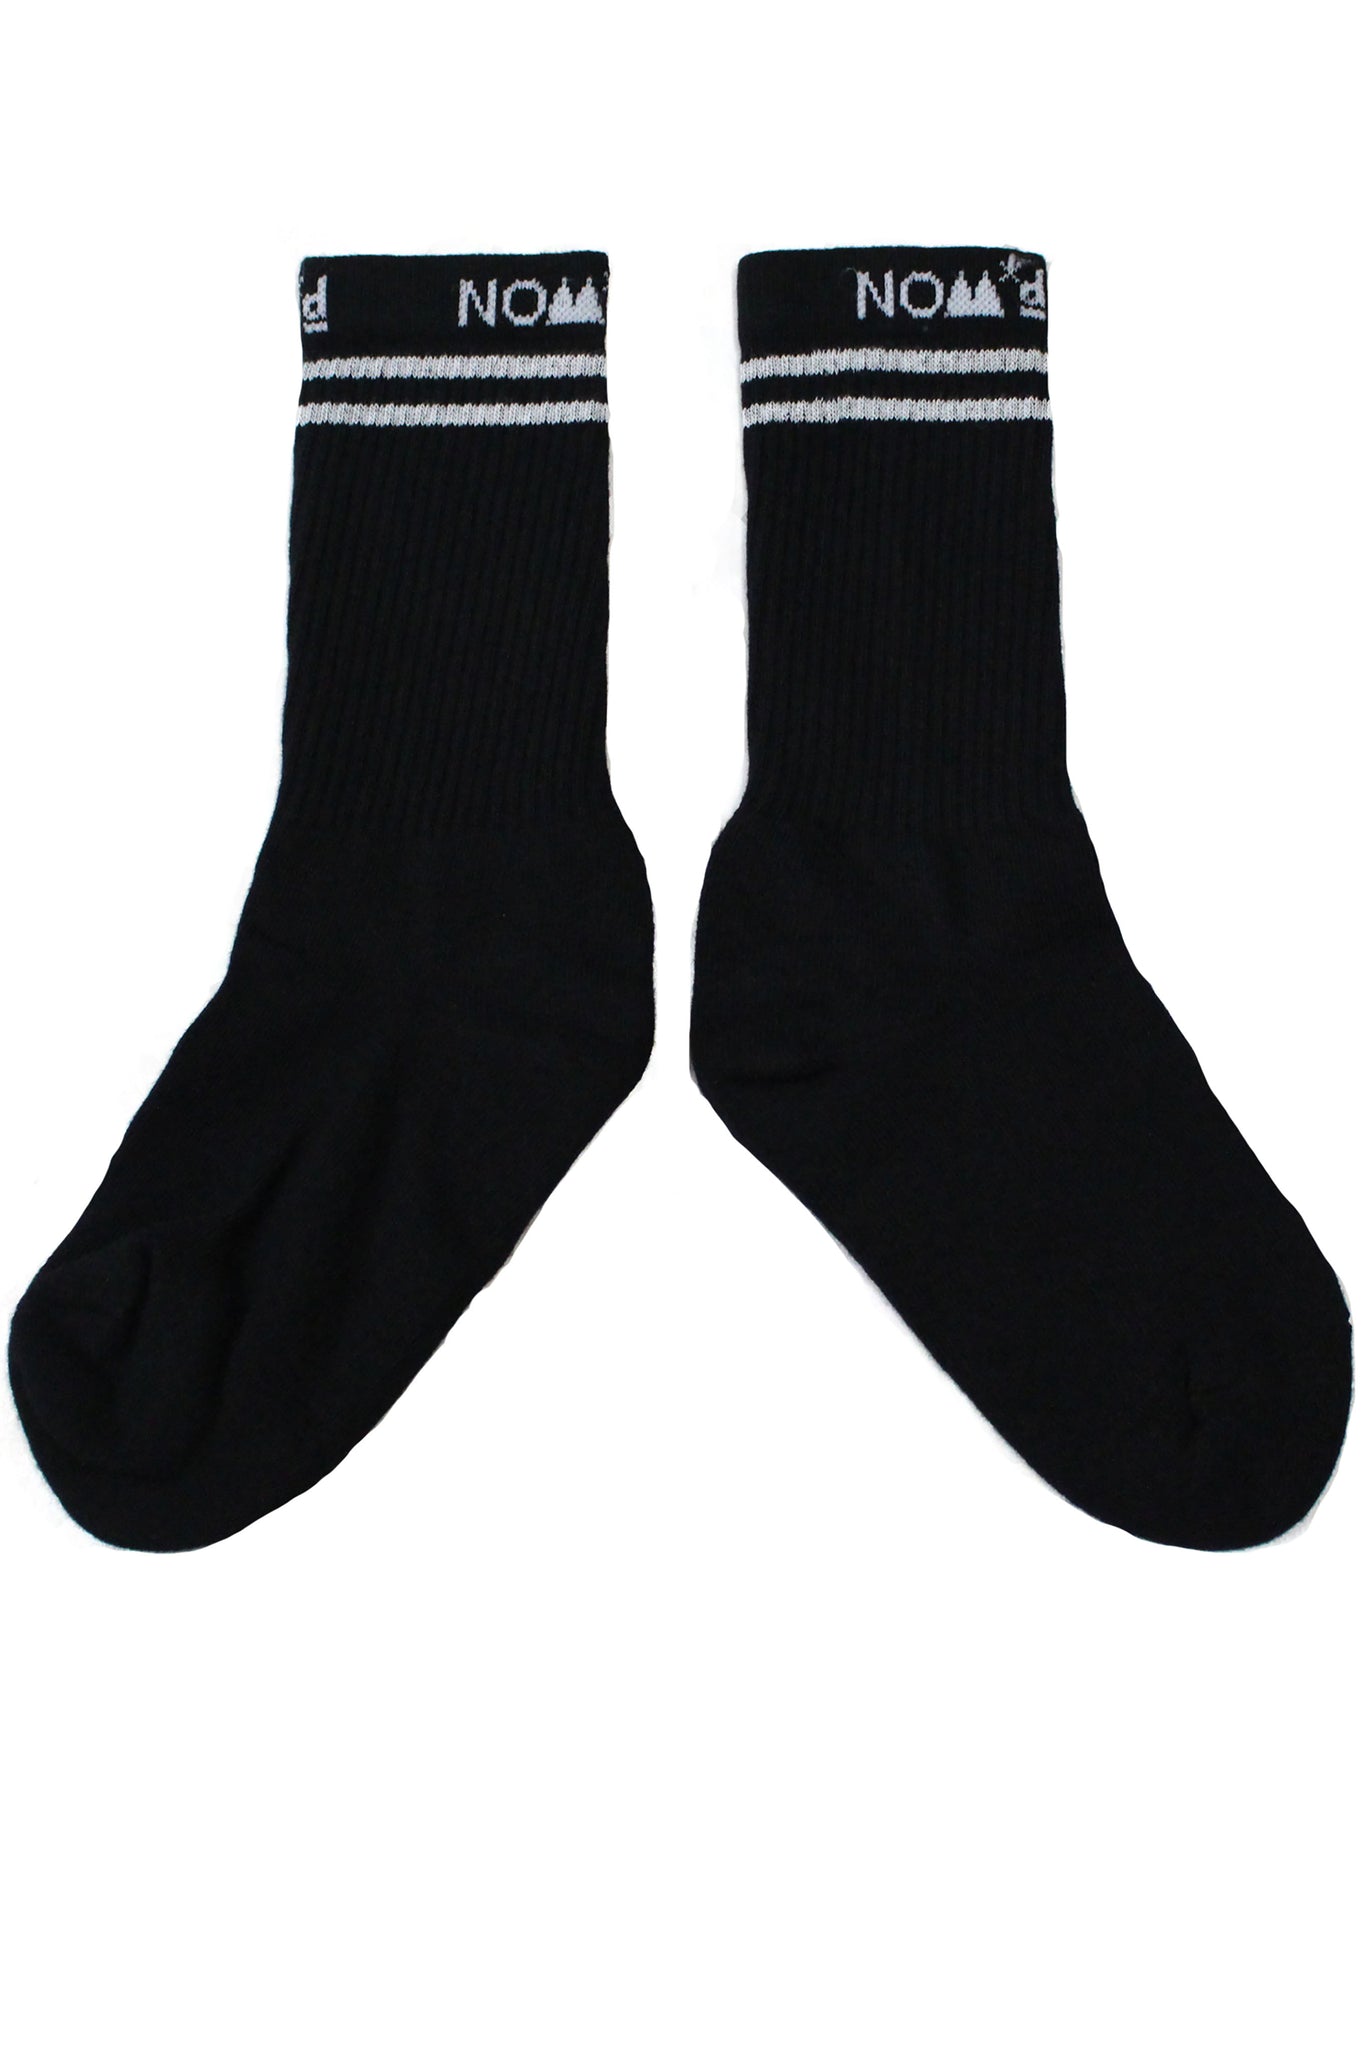 Stripe Socks | Cotton |  Black / White